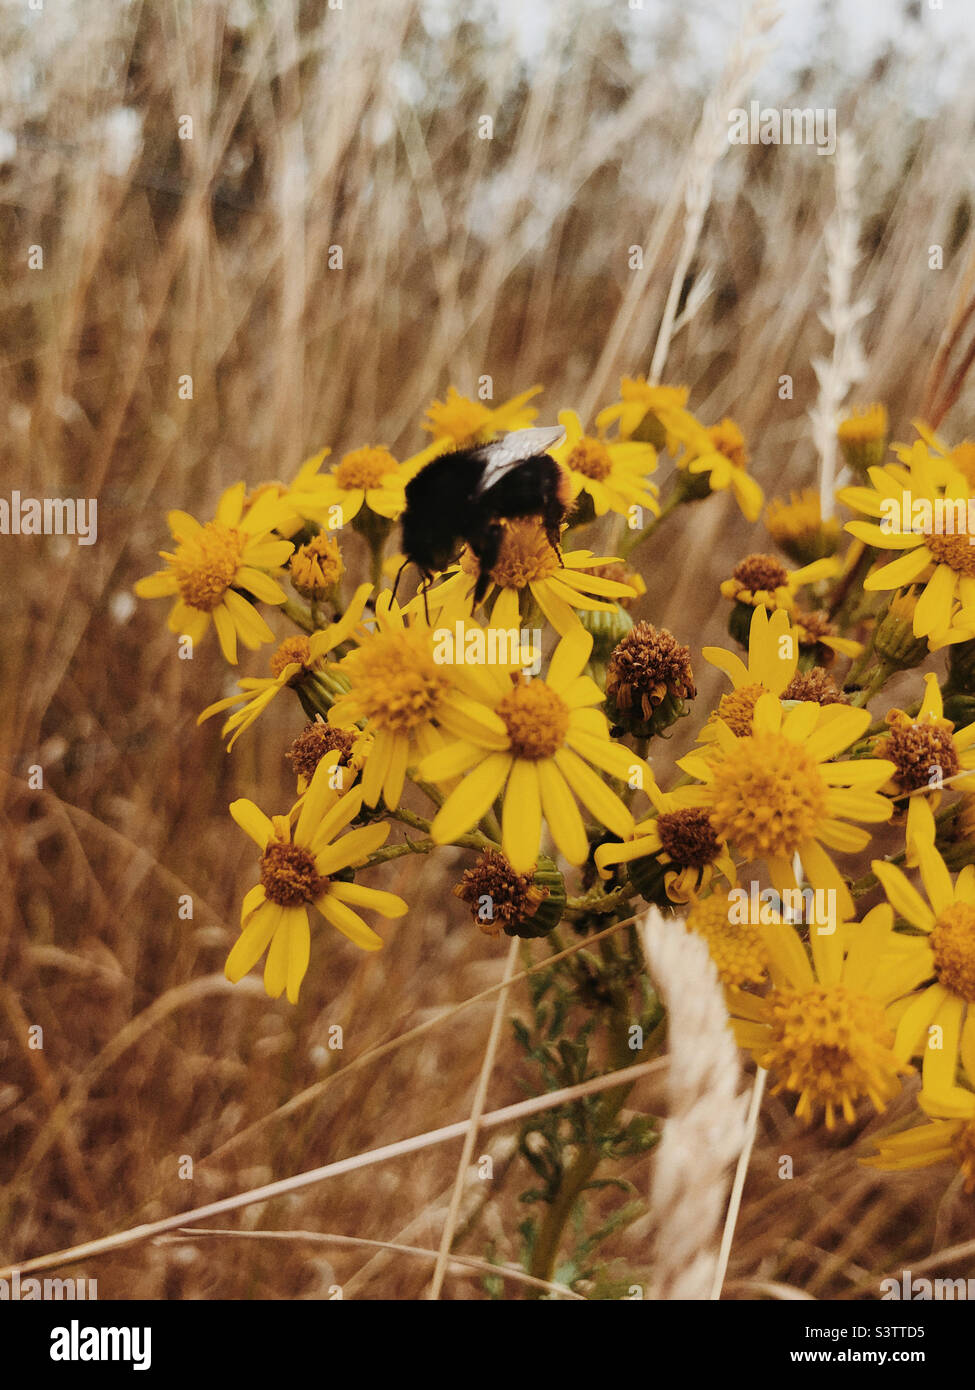 Bumble bee on yellow daisies Stock Photo